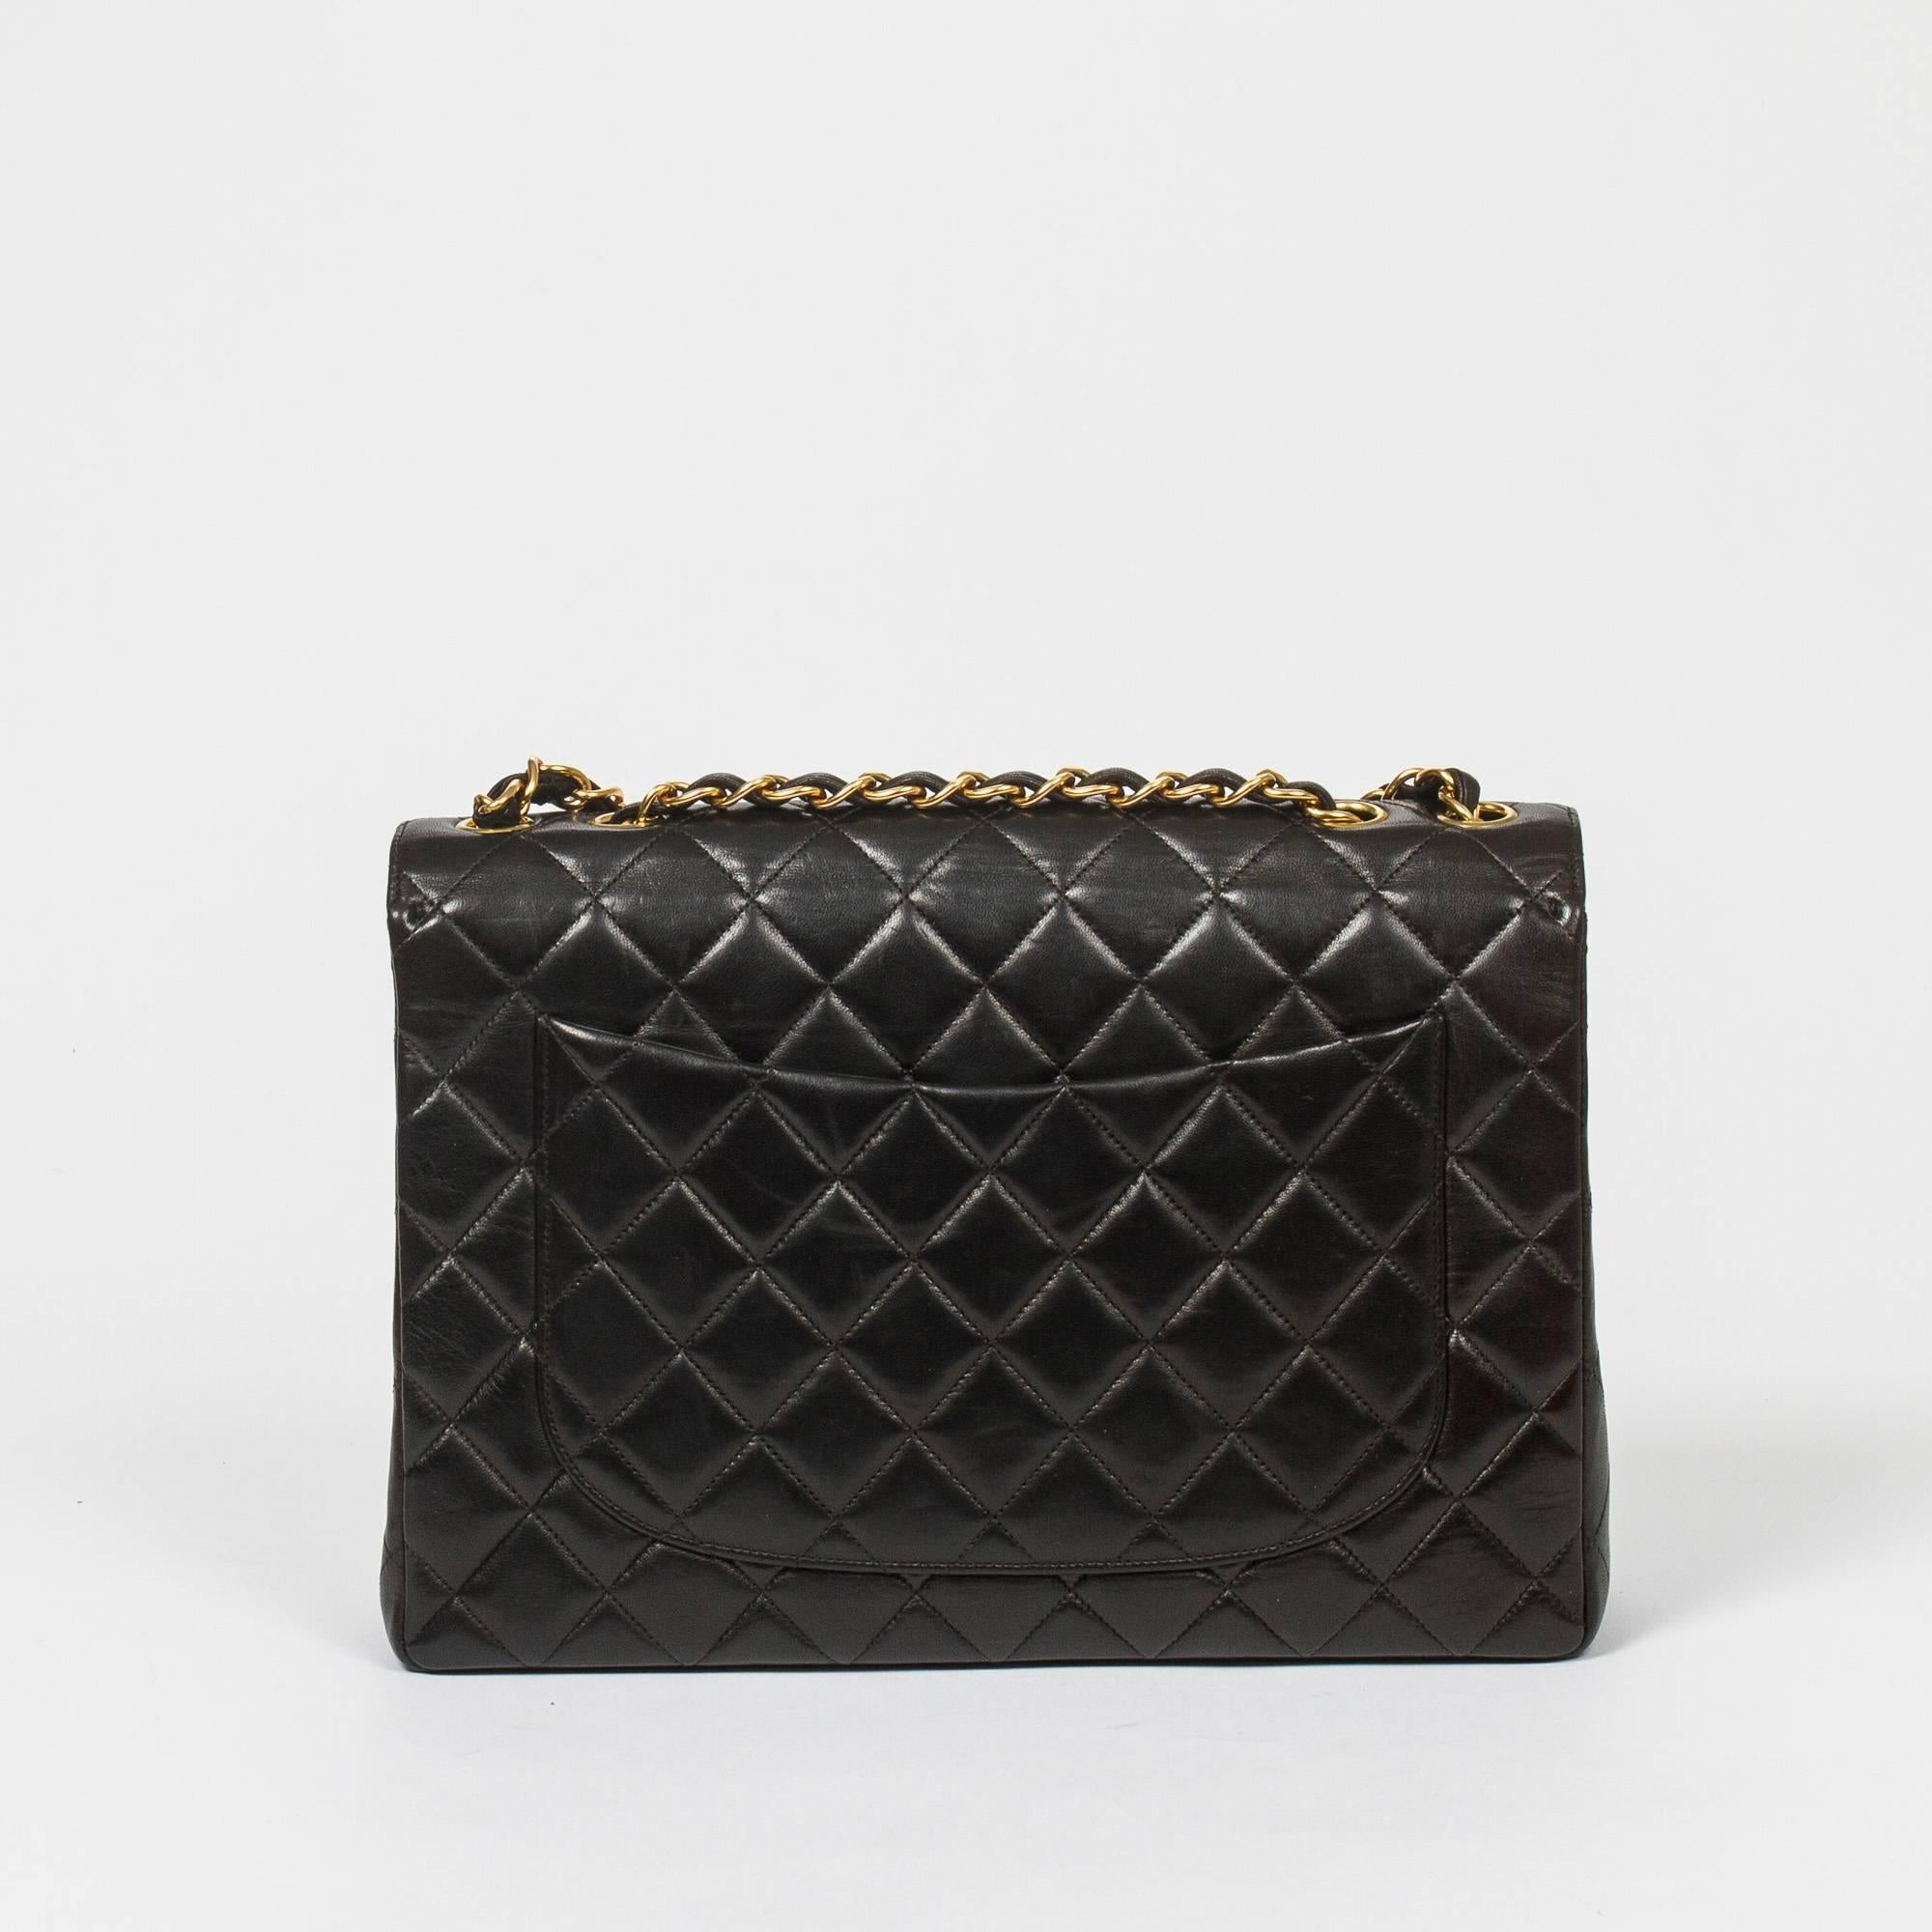 Women's Chanel Jumbo Small Turnlock Black Leather Bag